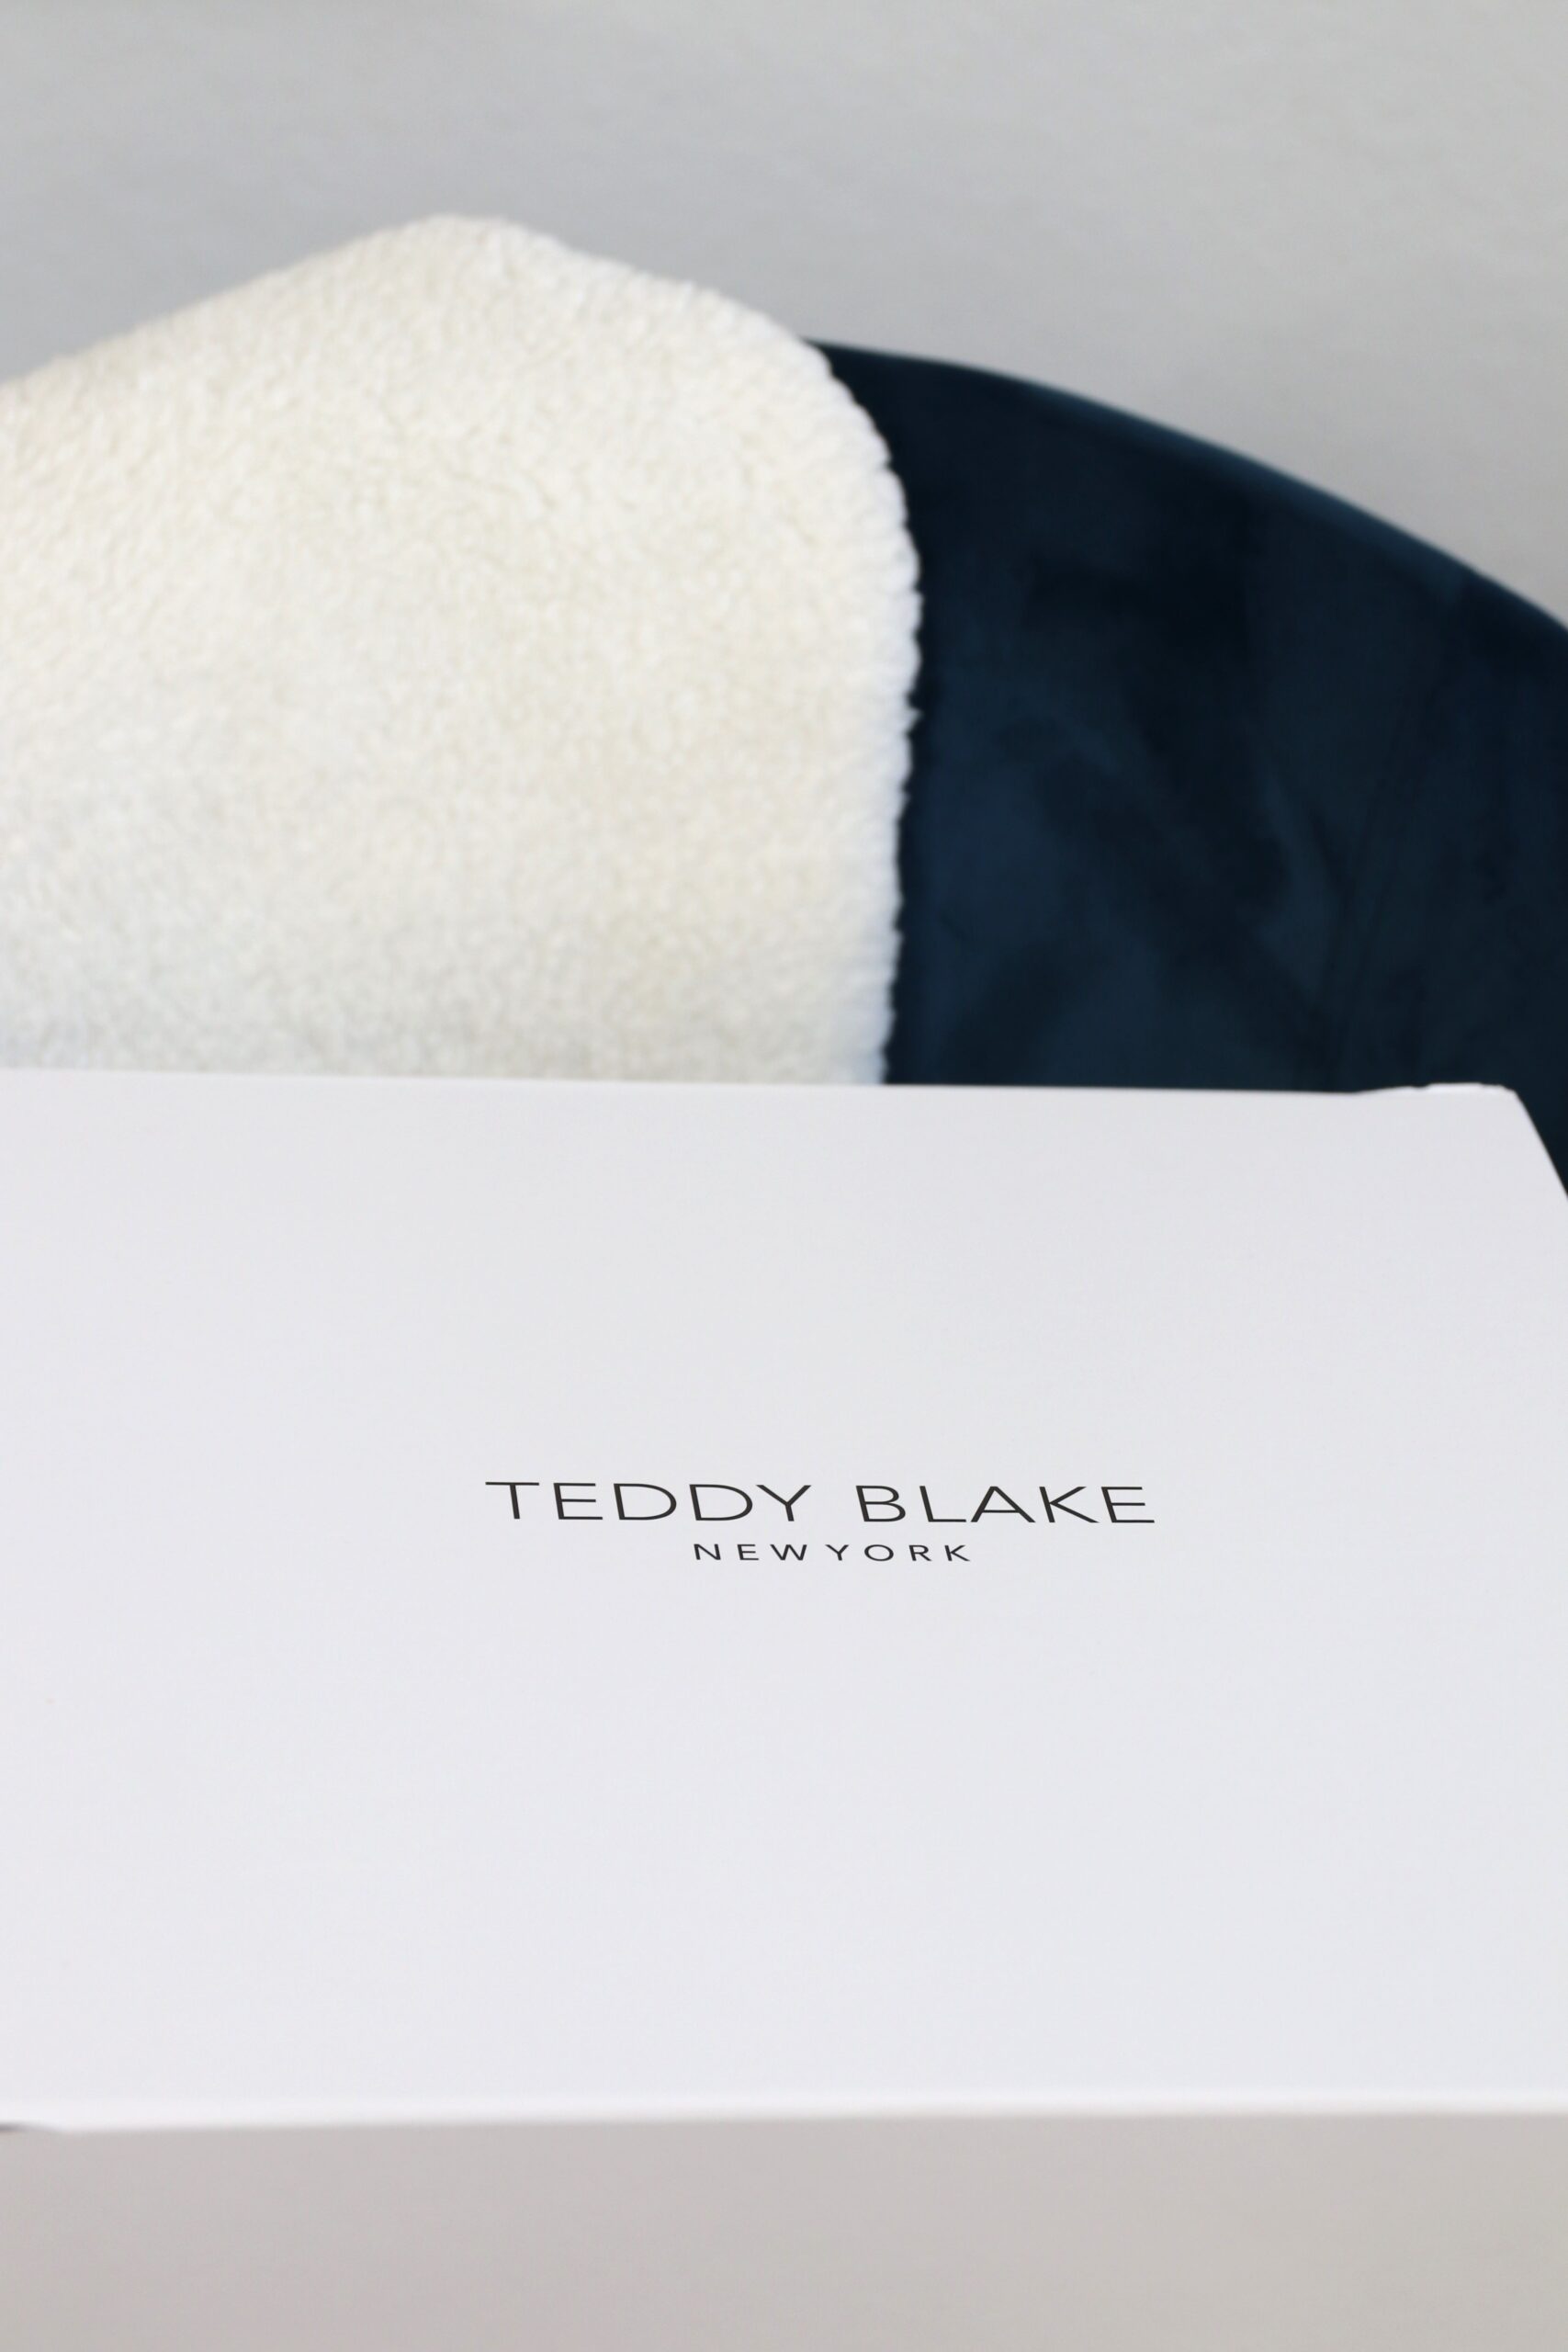 TEDDY BLAKE NEW YORK, LUXURY HANDBAGS AT AN AFFORDABLE PRICE